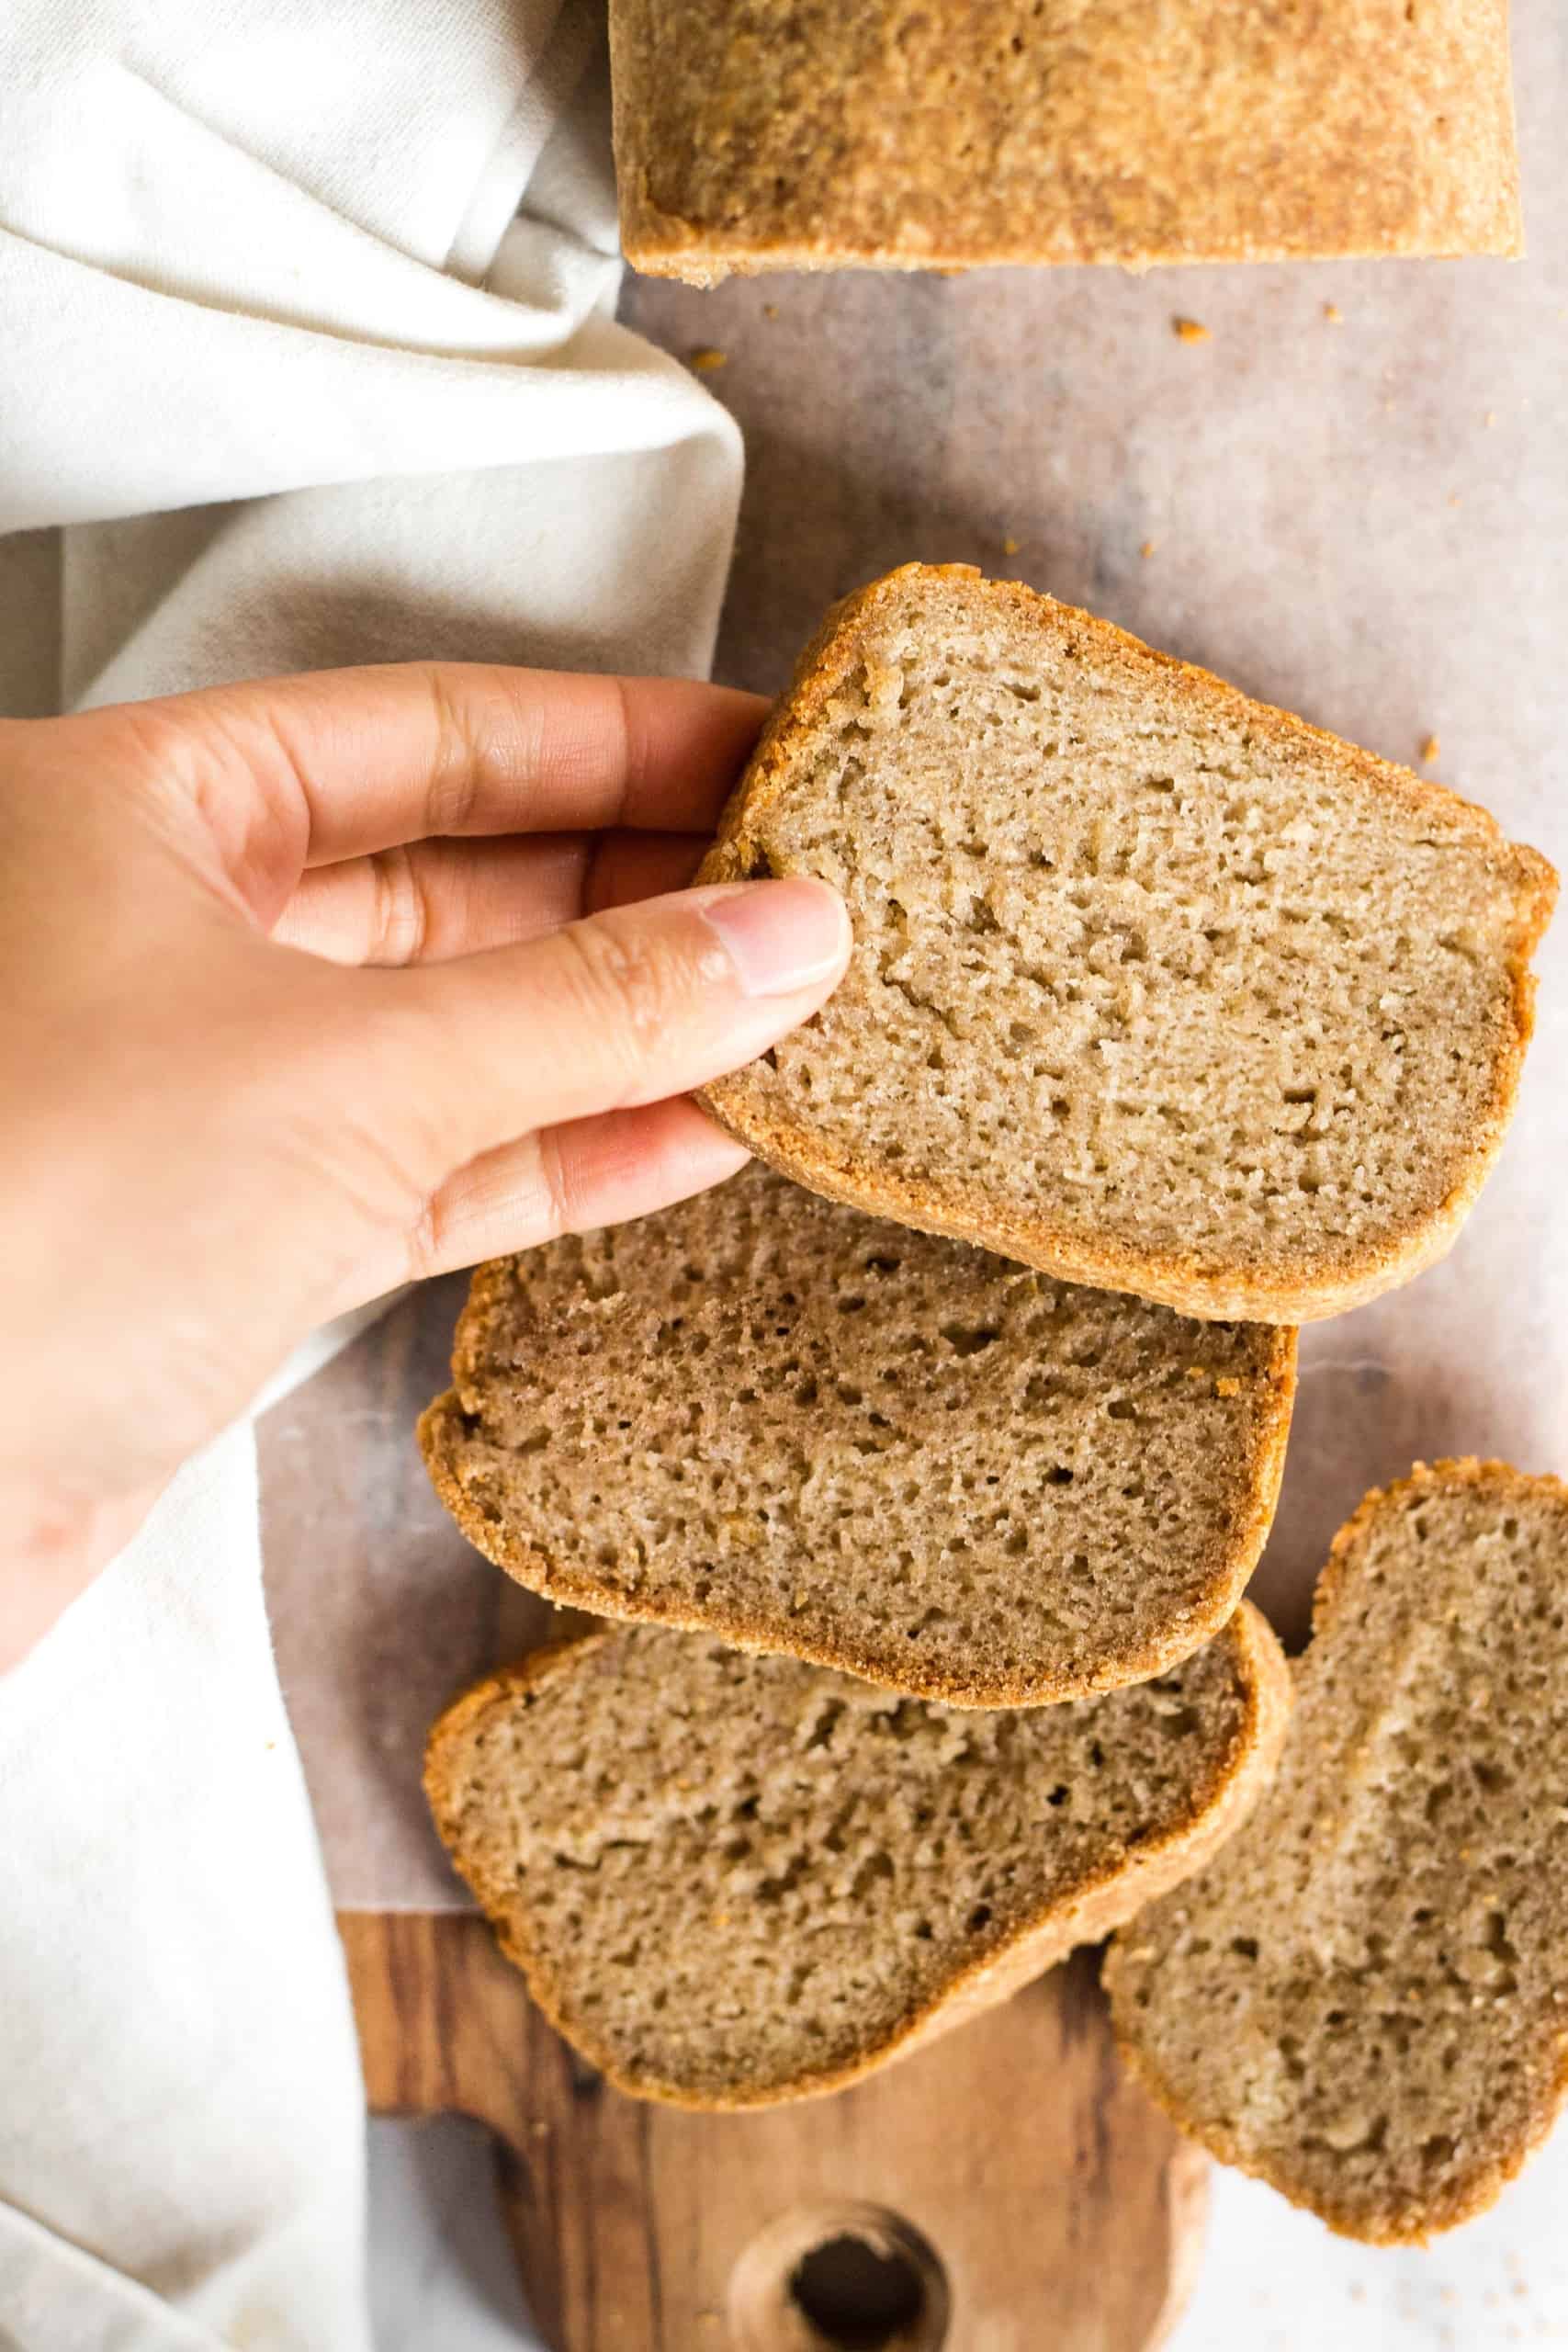 Reaching for a slice of gluten-free whole grain bread.